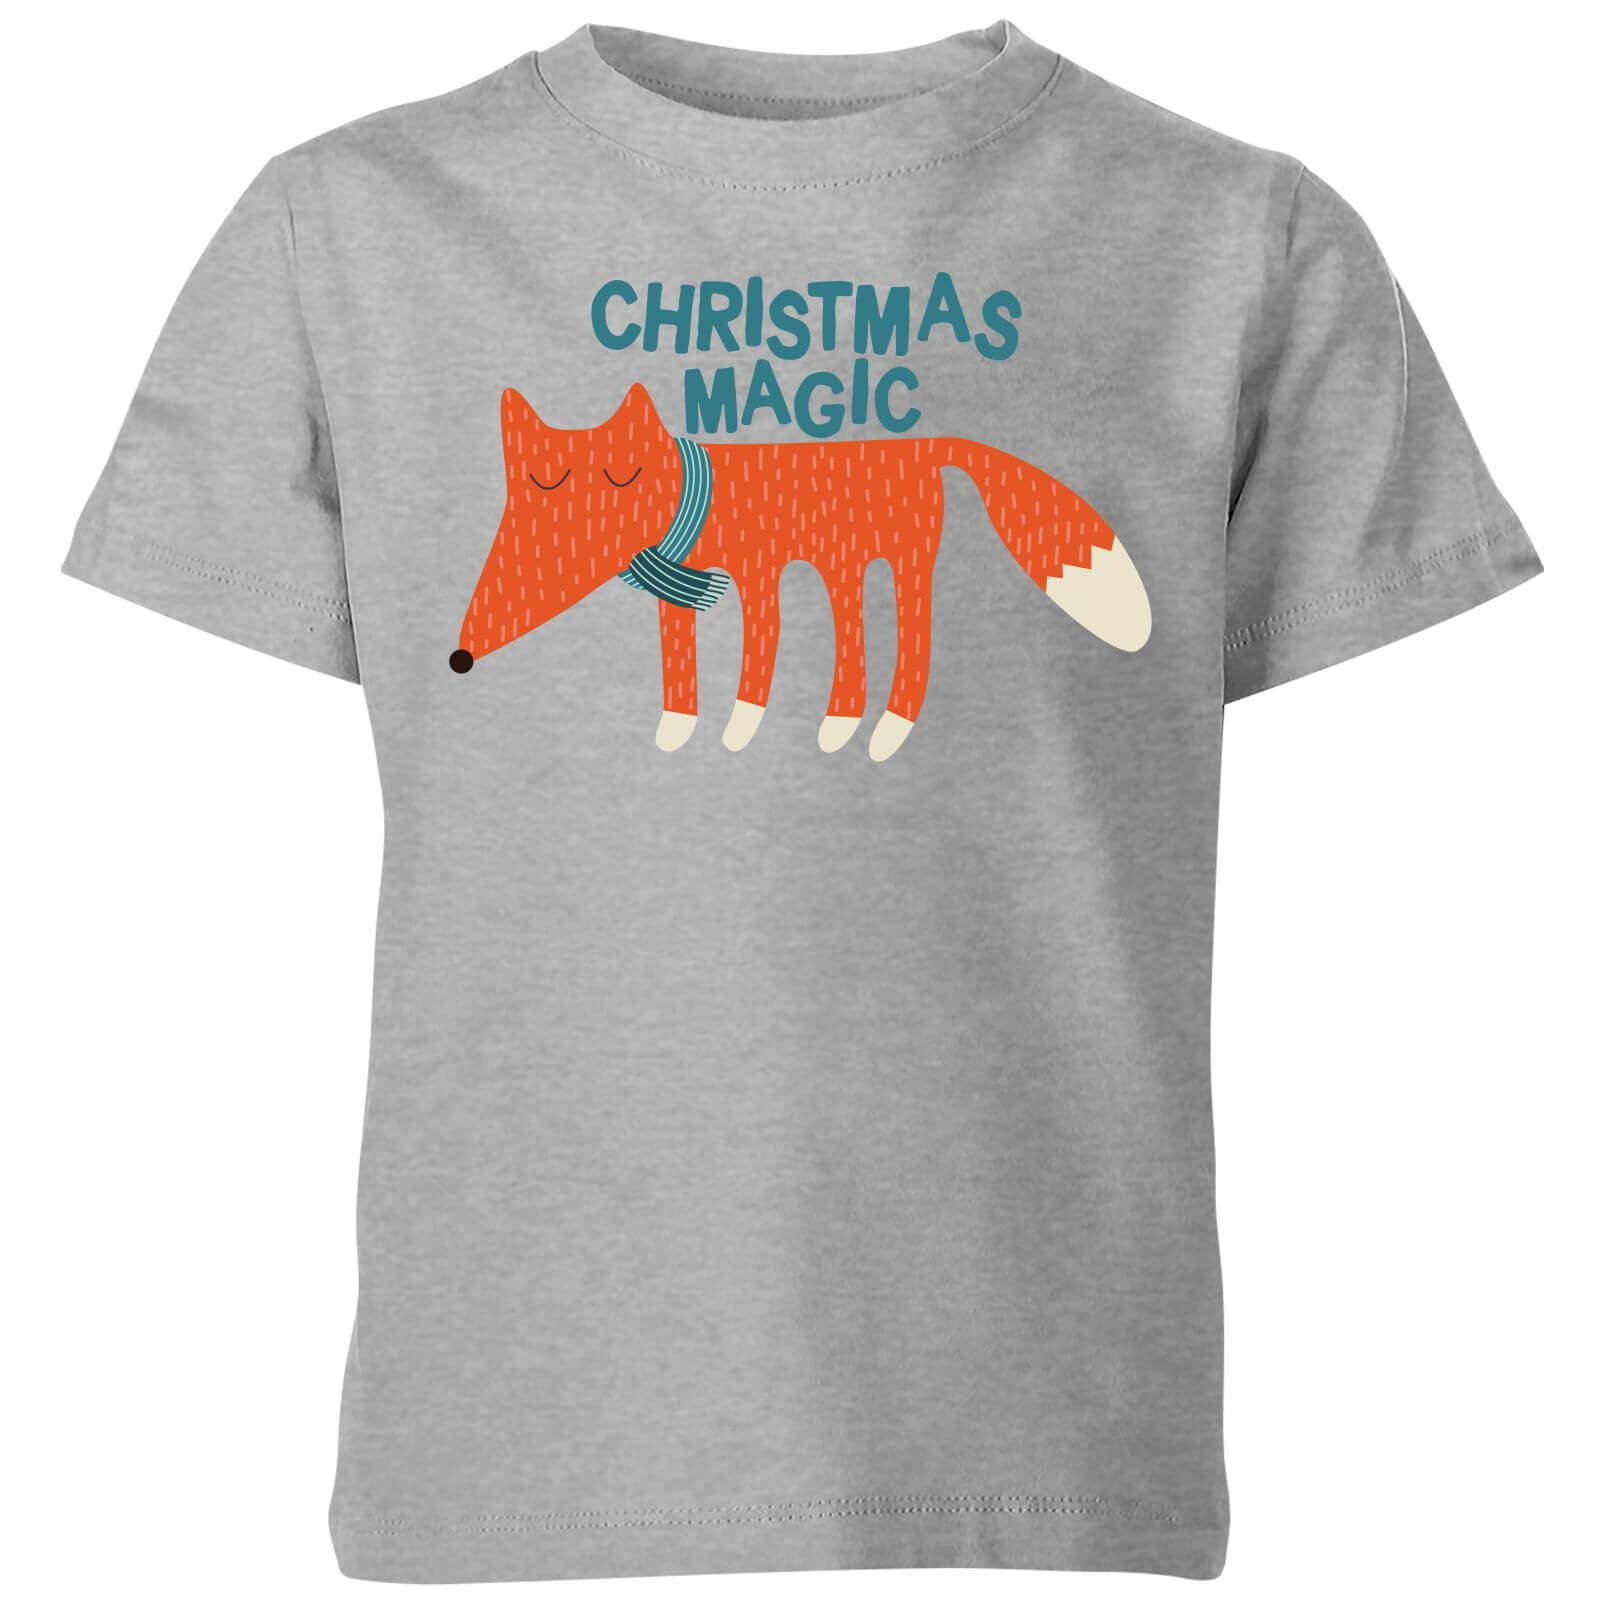 Christmas Magic Kids' T-Shirt - Grey - 3-4 Years - Grey